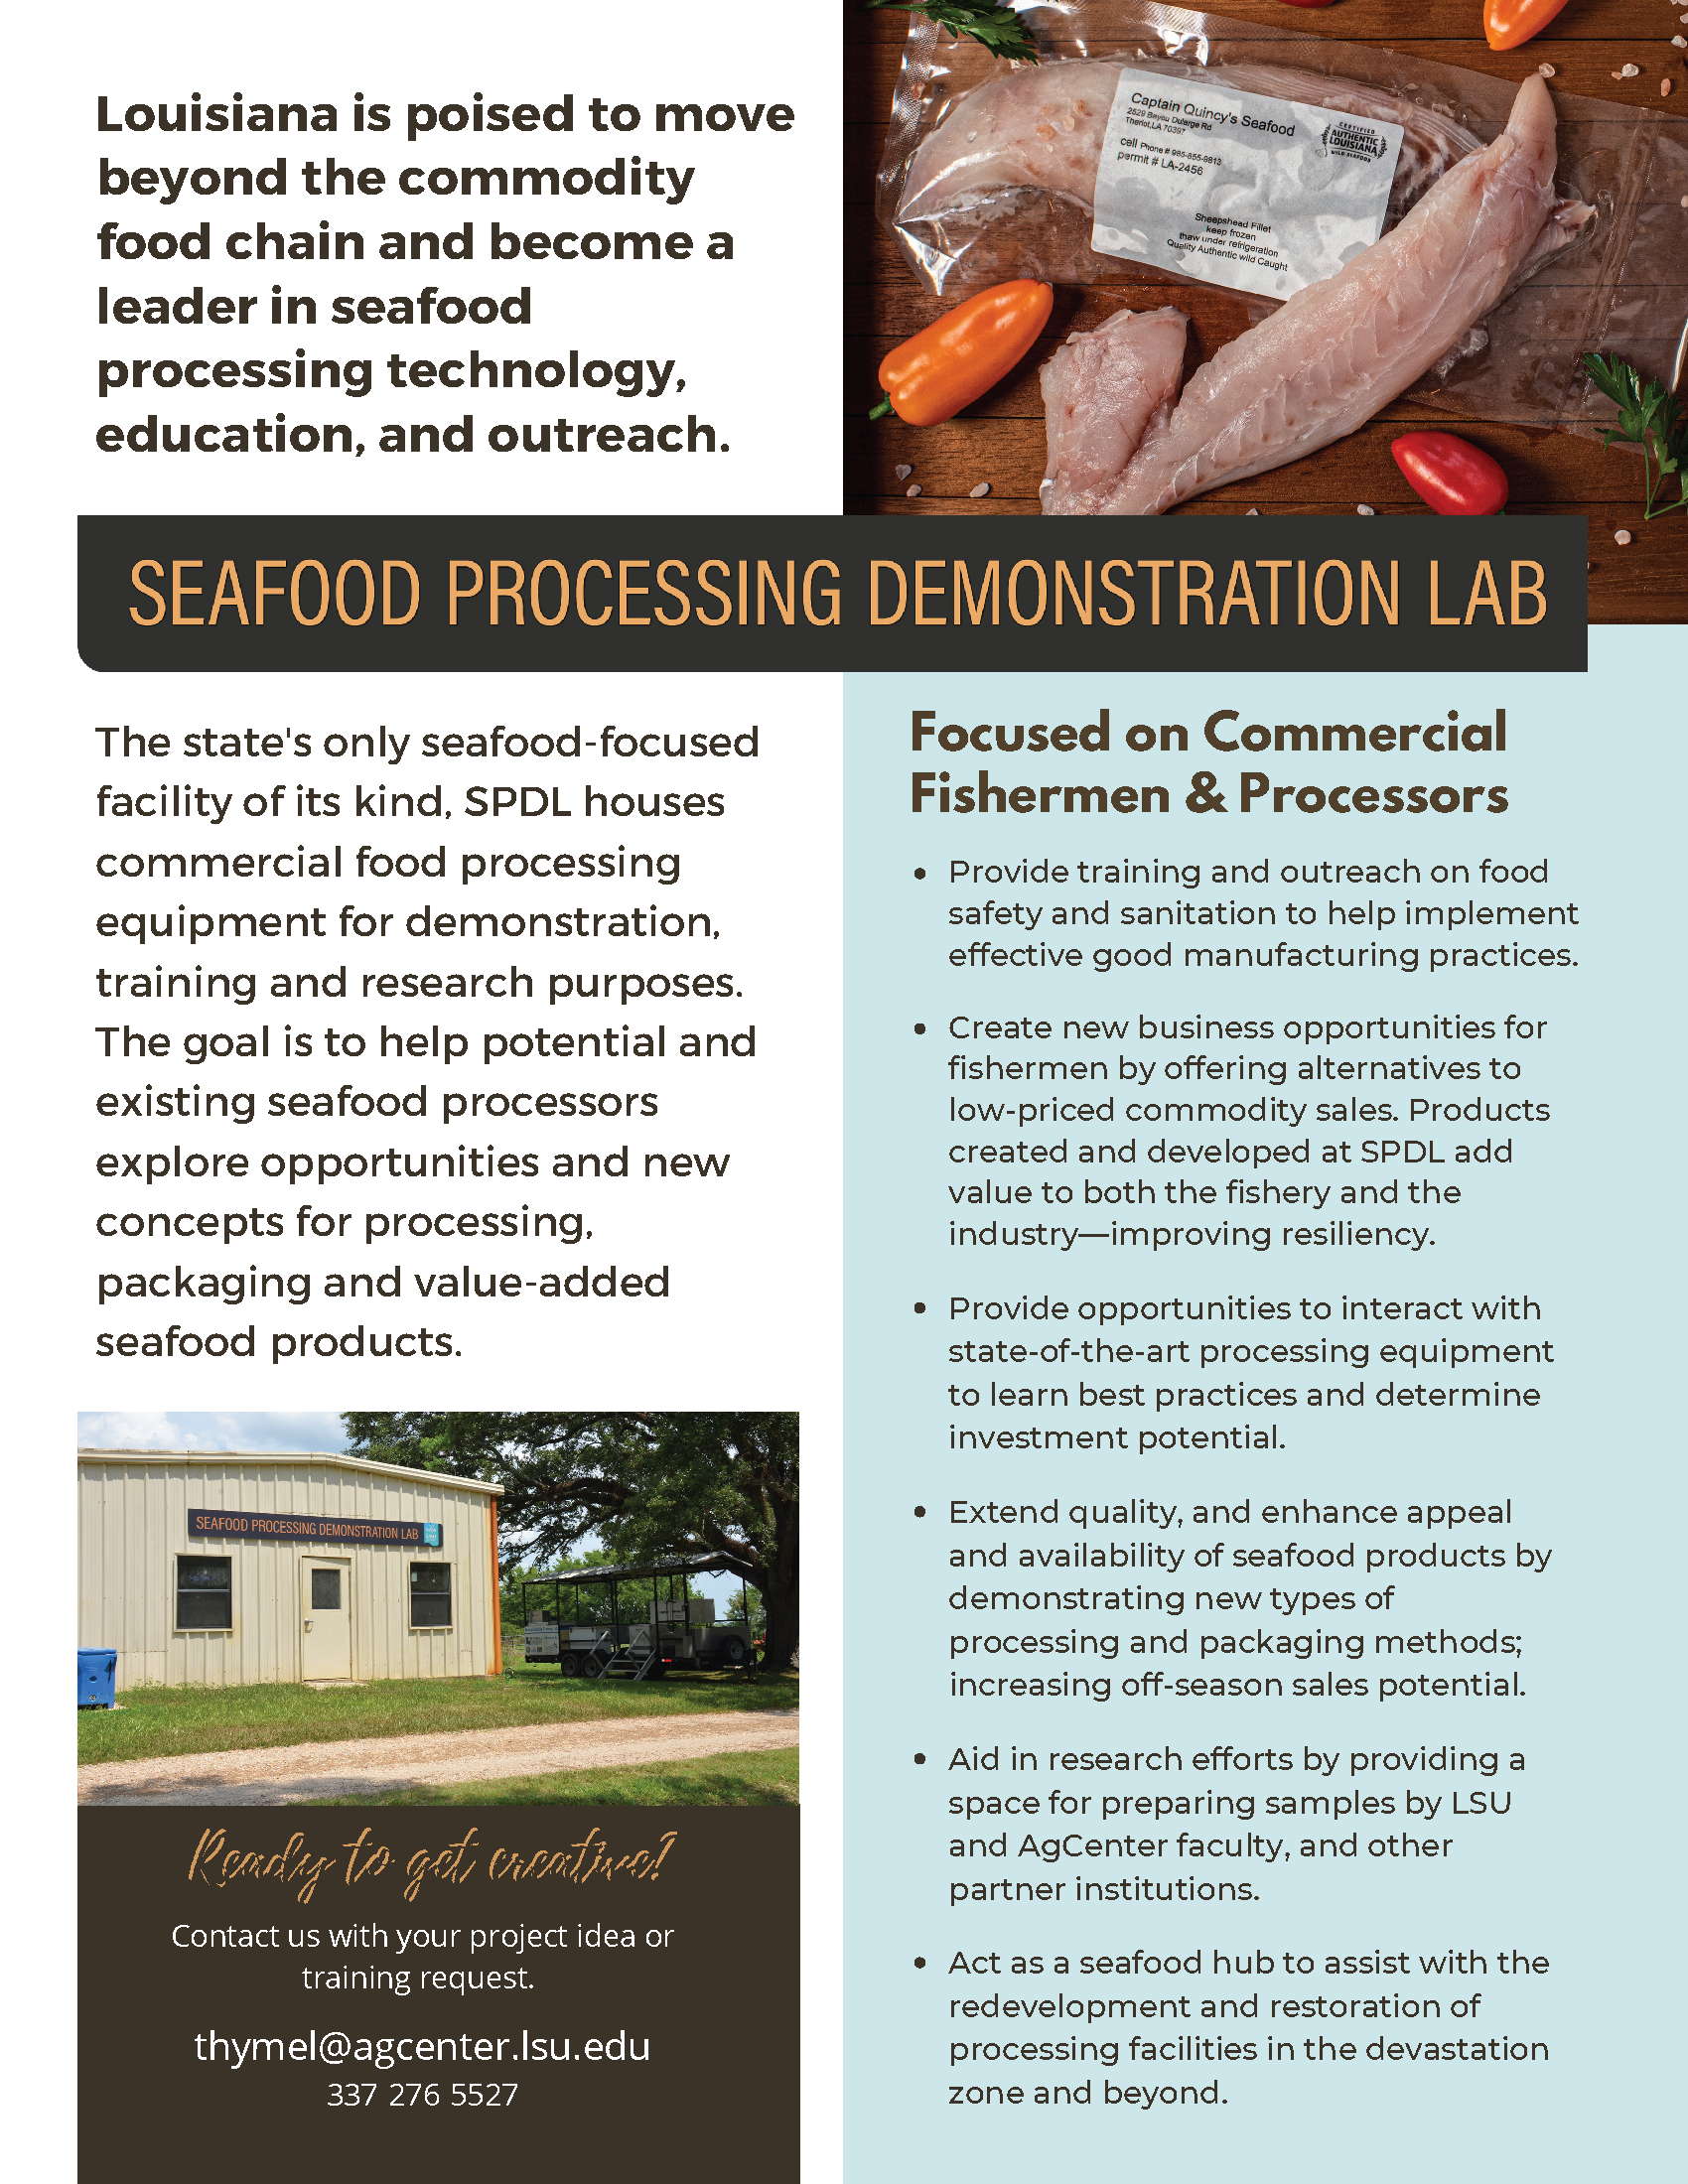 Seafood Processing Demonstration description.